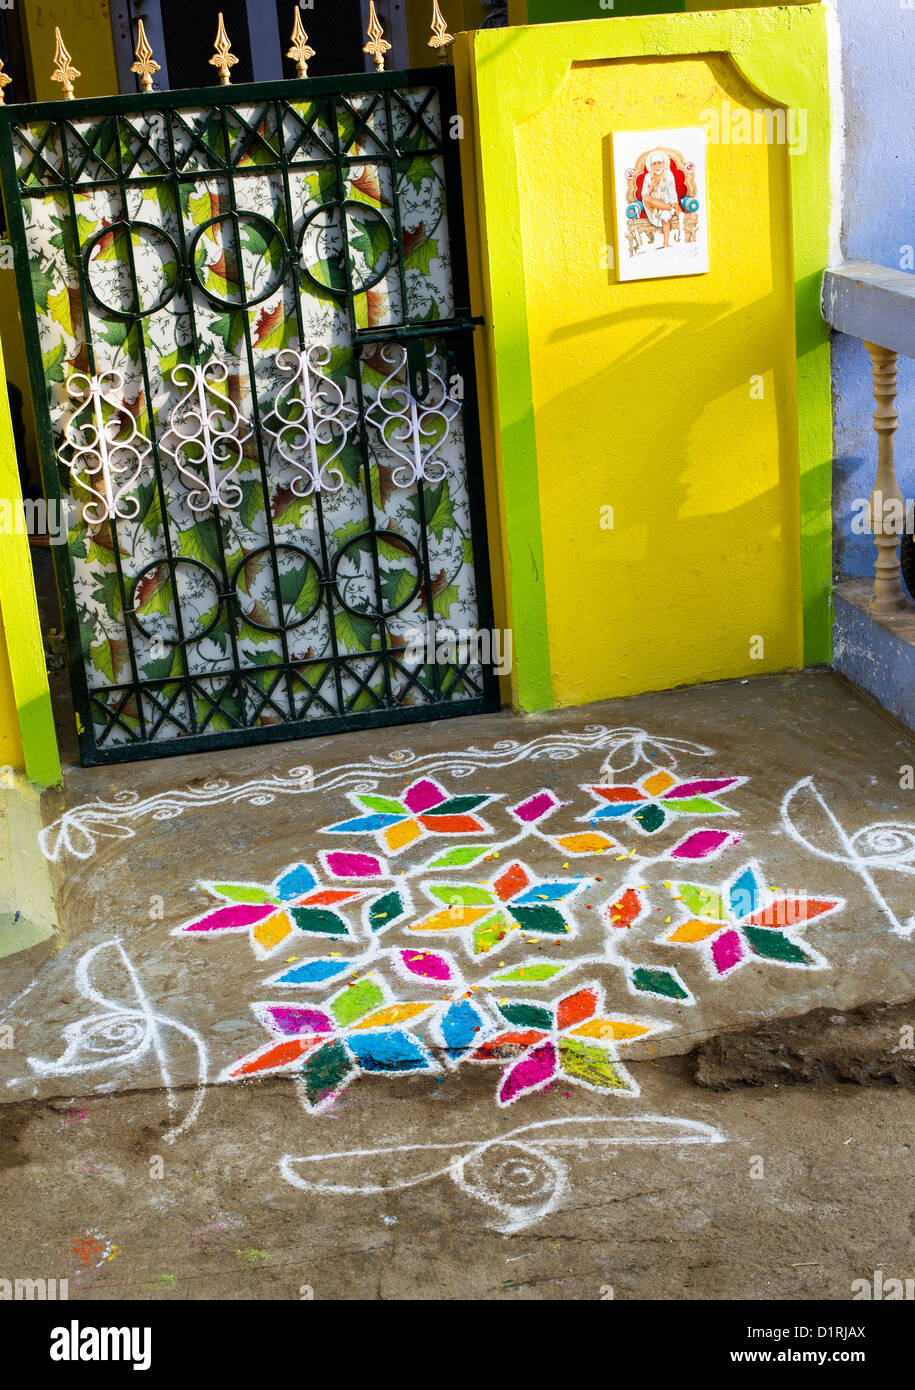 Rangoli coloured powder design in an Indian street during the sankranthi festival. Andhra Pradesh, India Stock Photo